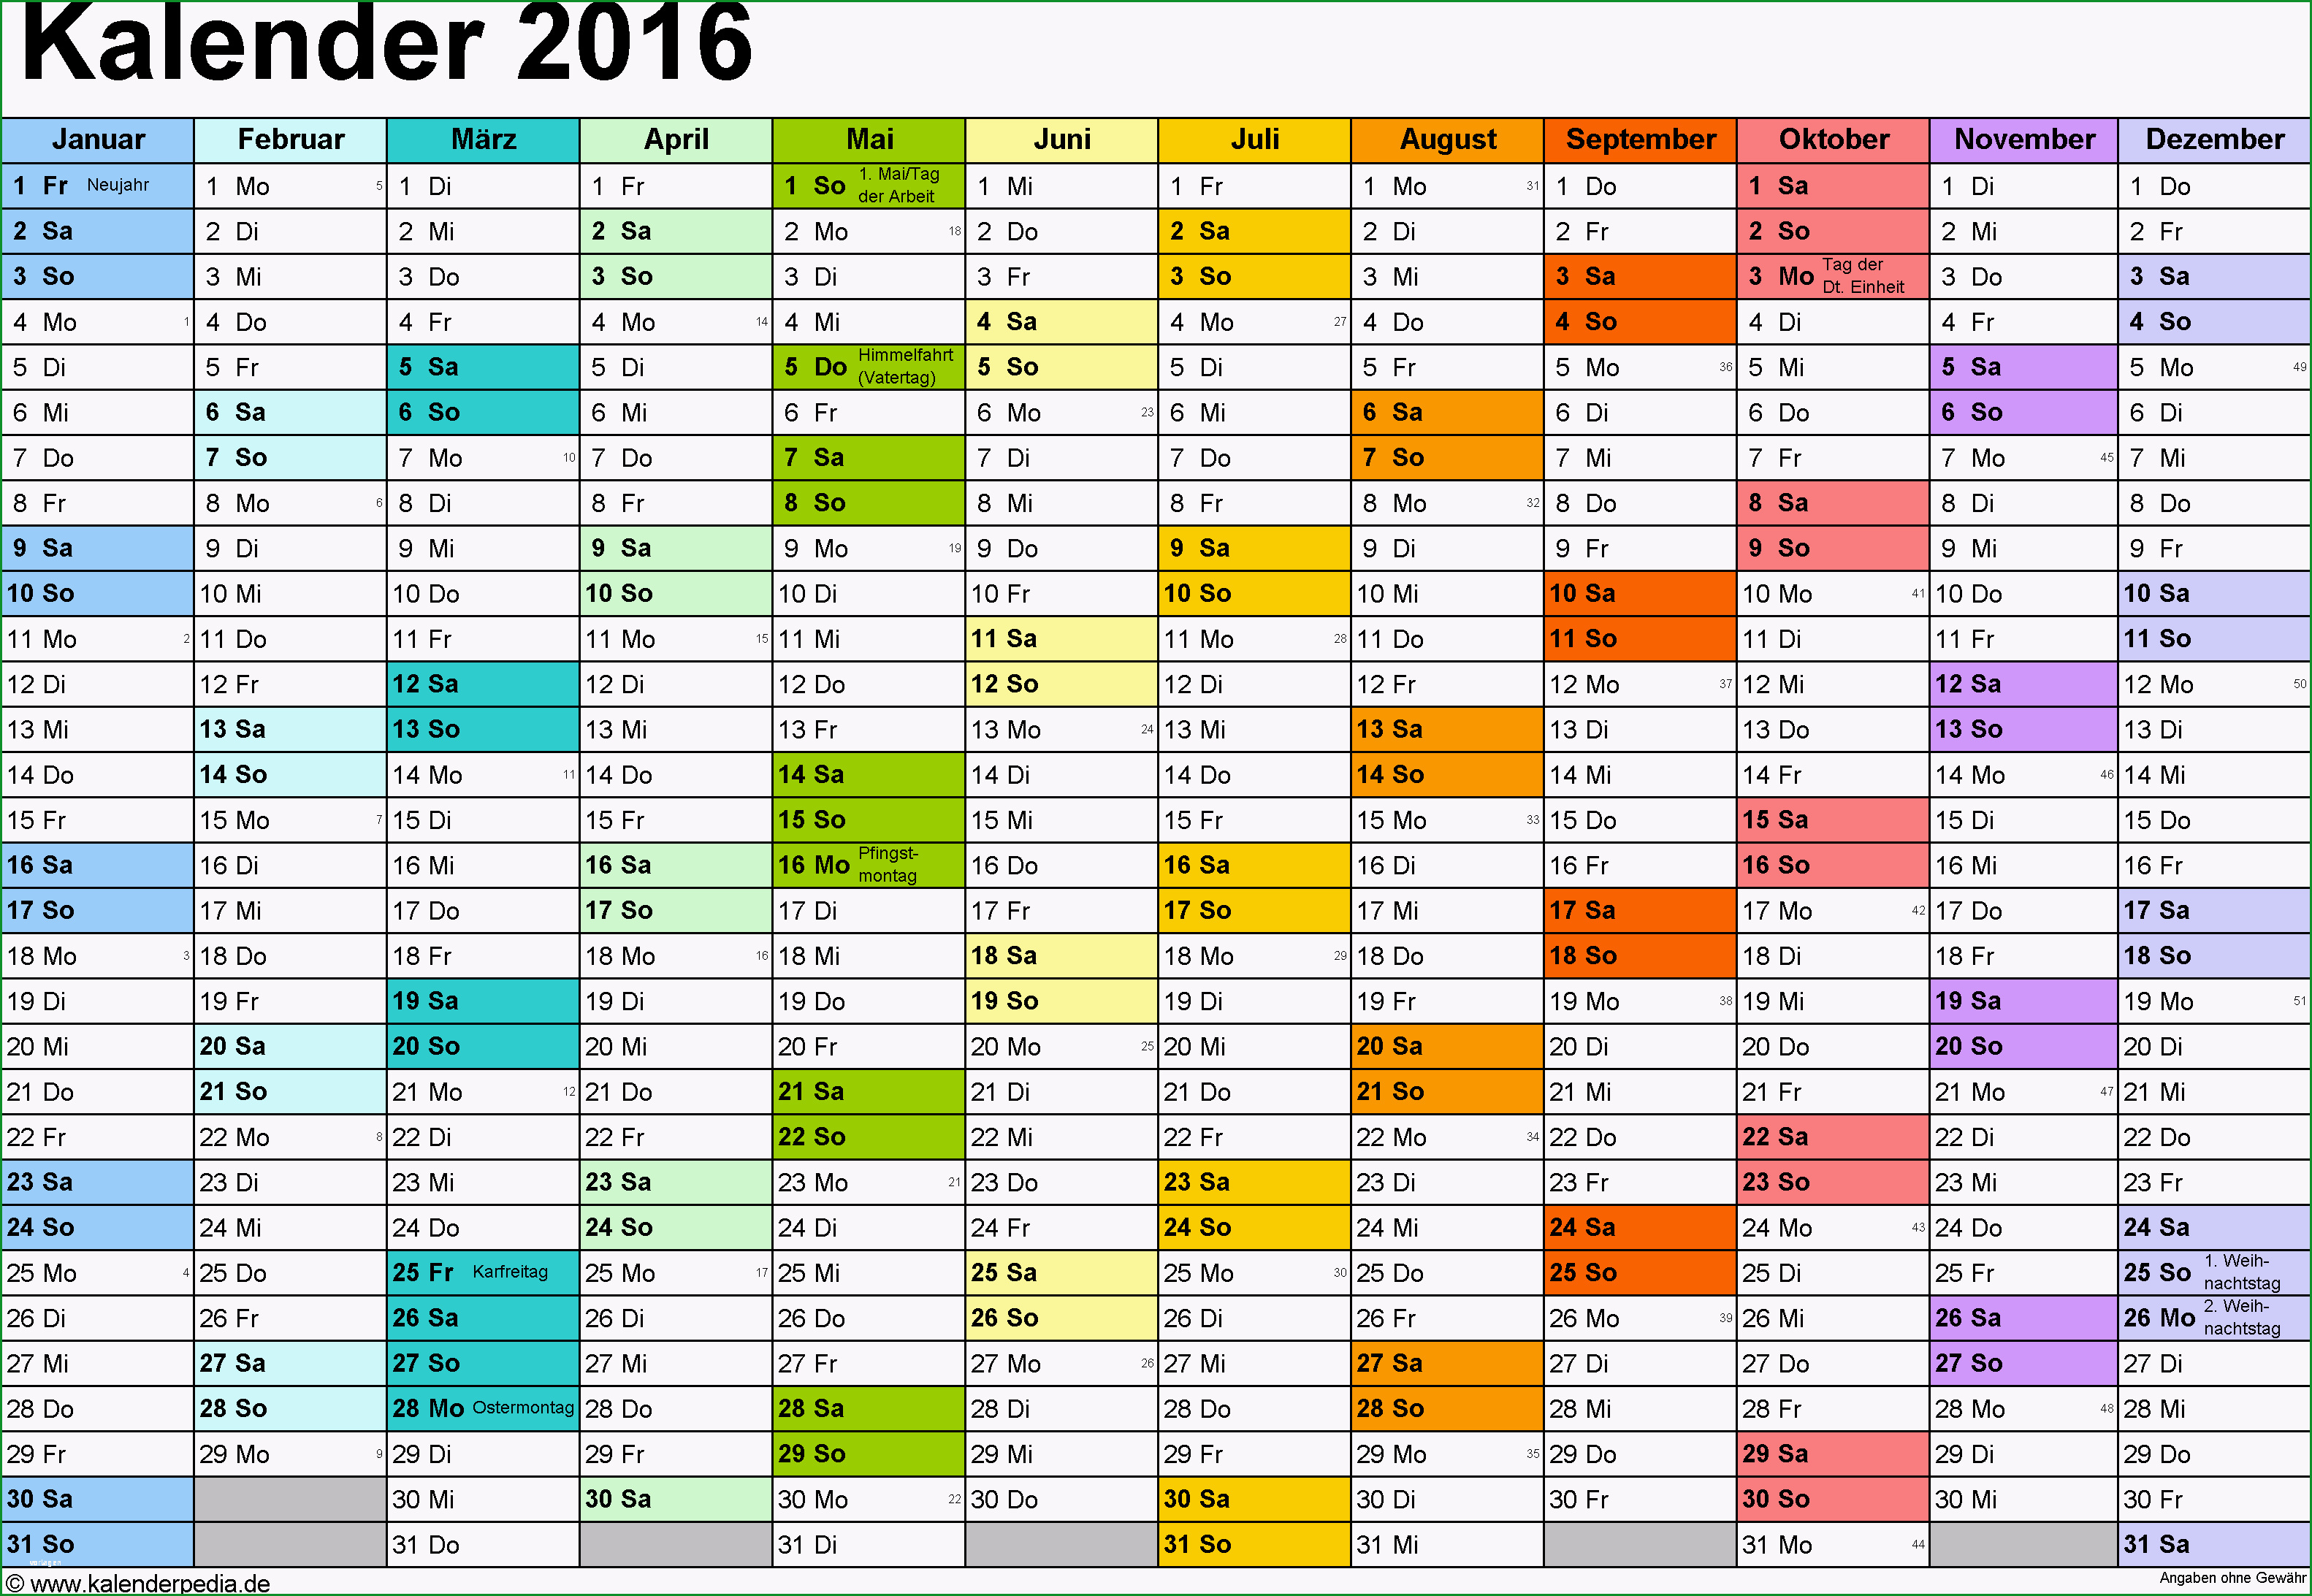 kalender 2016 excel vorlagen